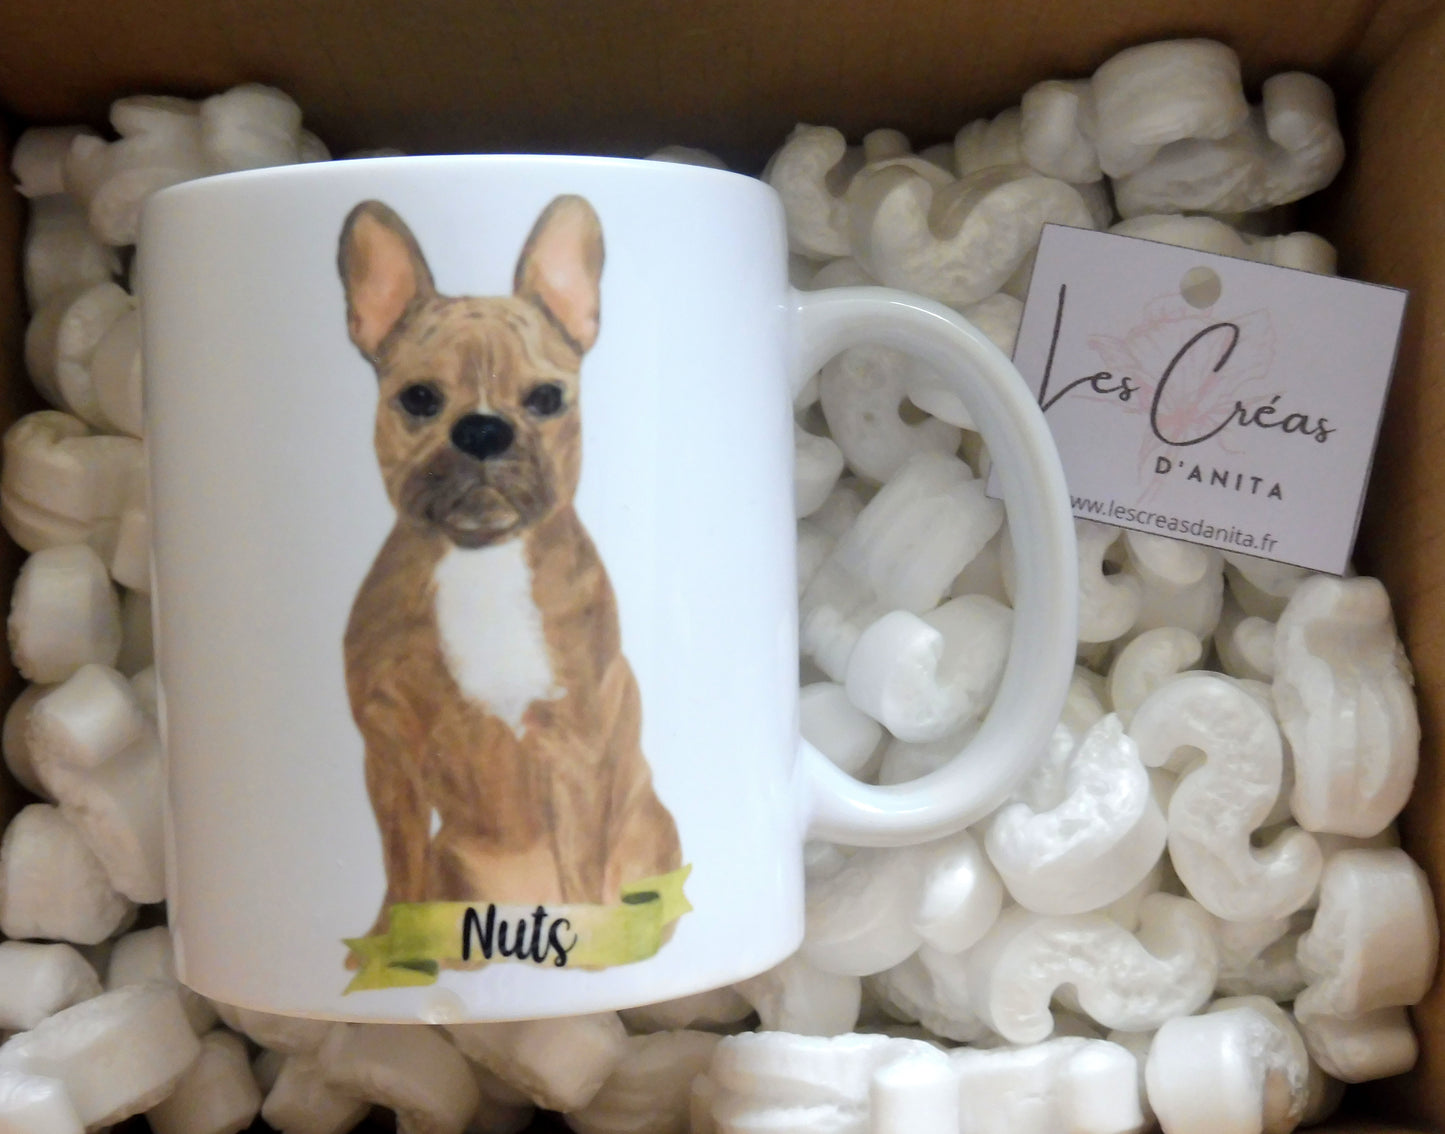 Personalized Saint Bernard dog mug and his first name